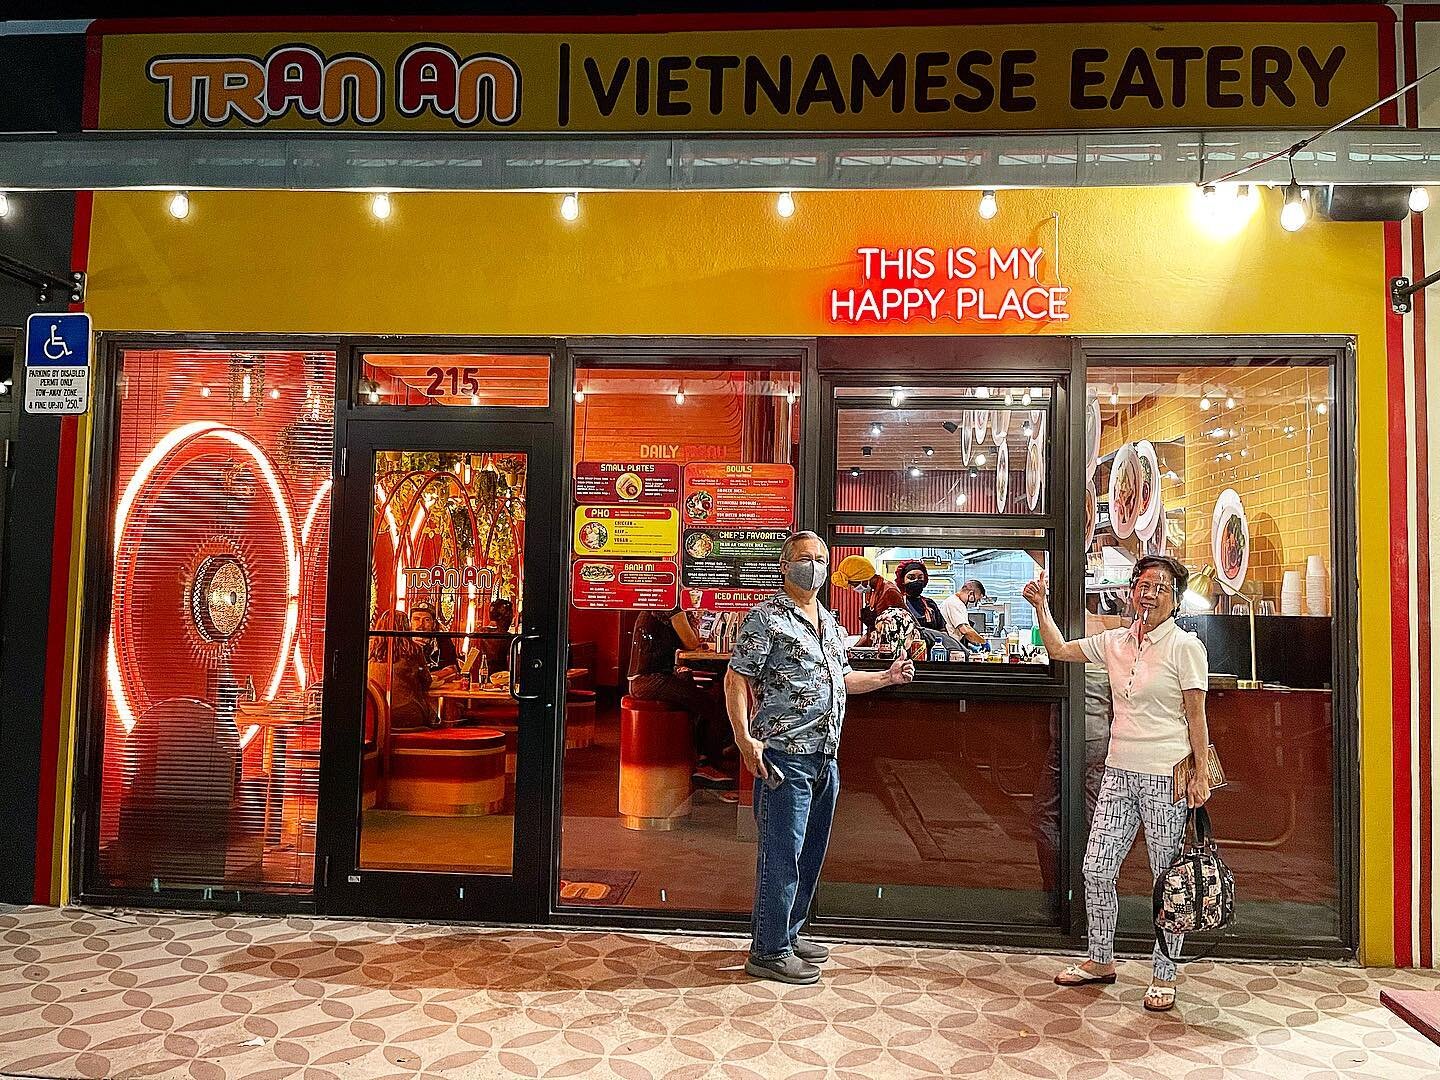 Despedida dinner at Tran An for some Vietnamese 🥳